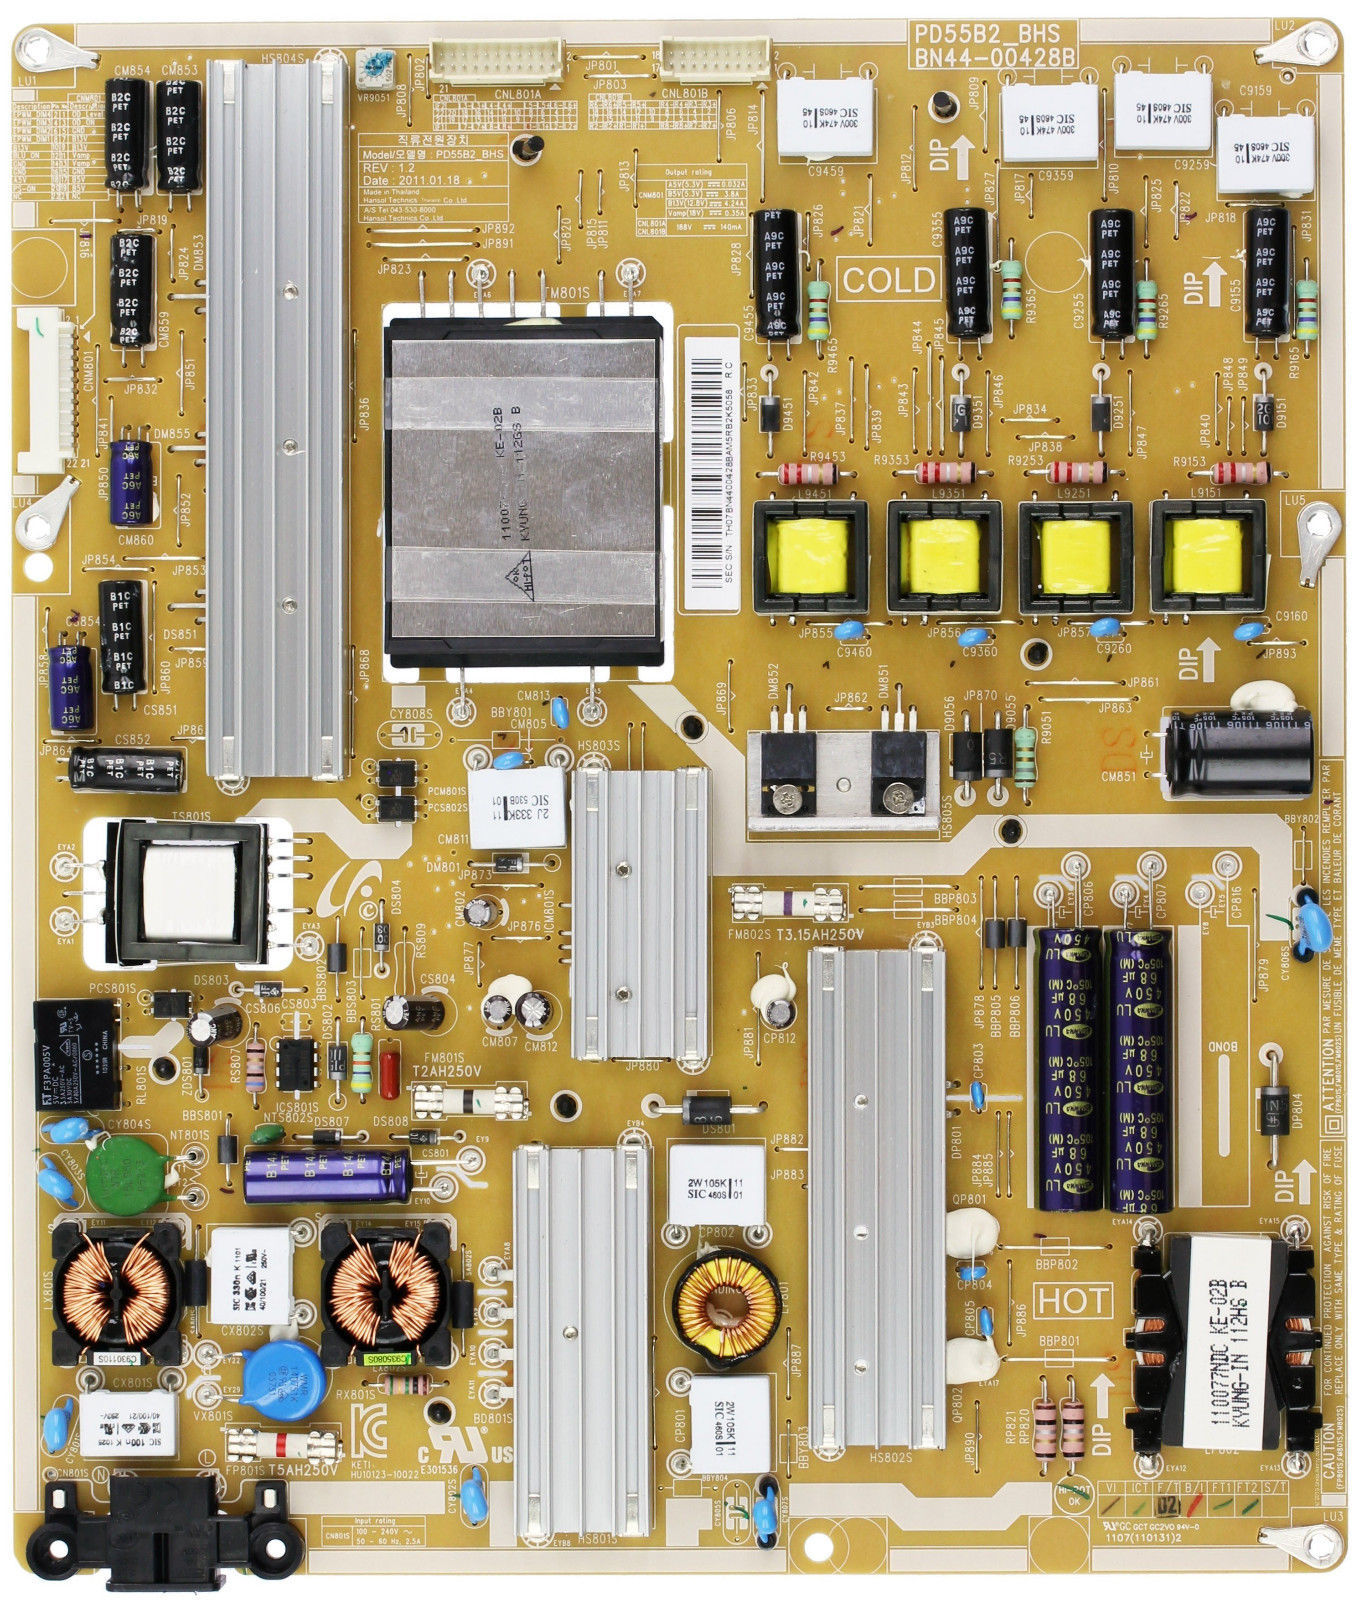 Primary image for Samsung BN44-00428B UN55D6420UFXZA 6400 6500 6900 Power Supply Repair + Upgrade!